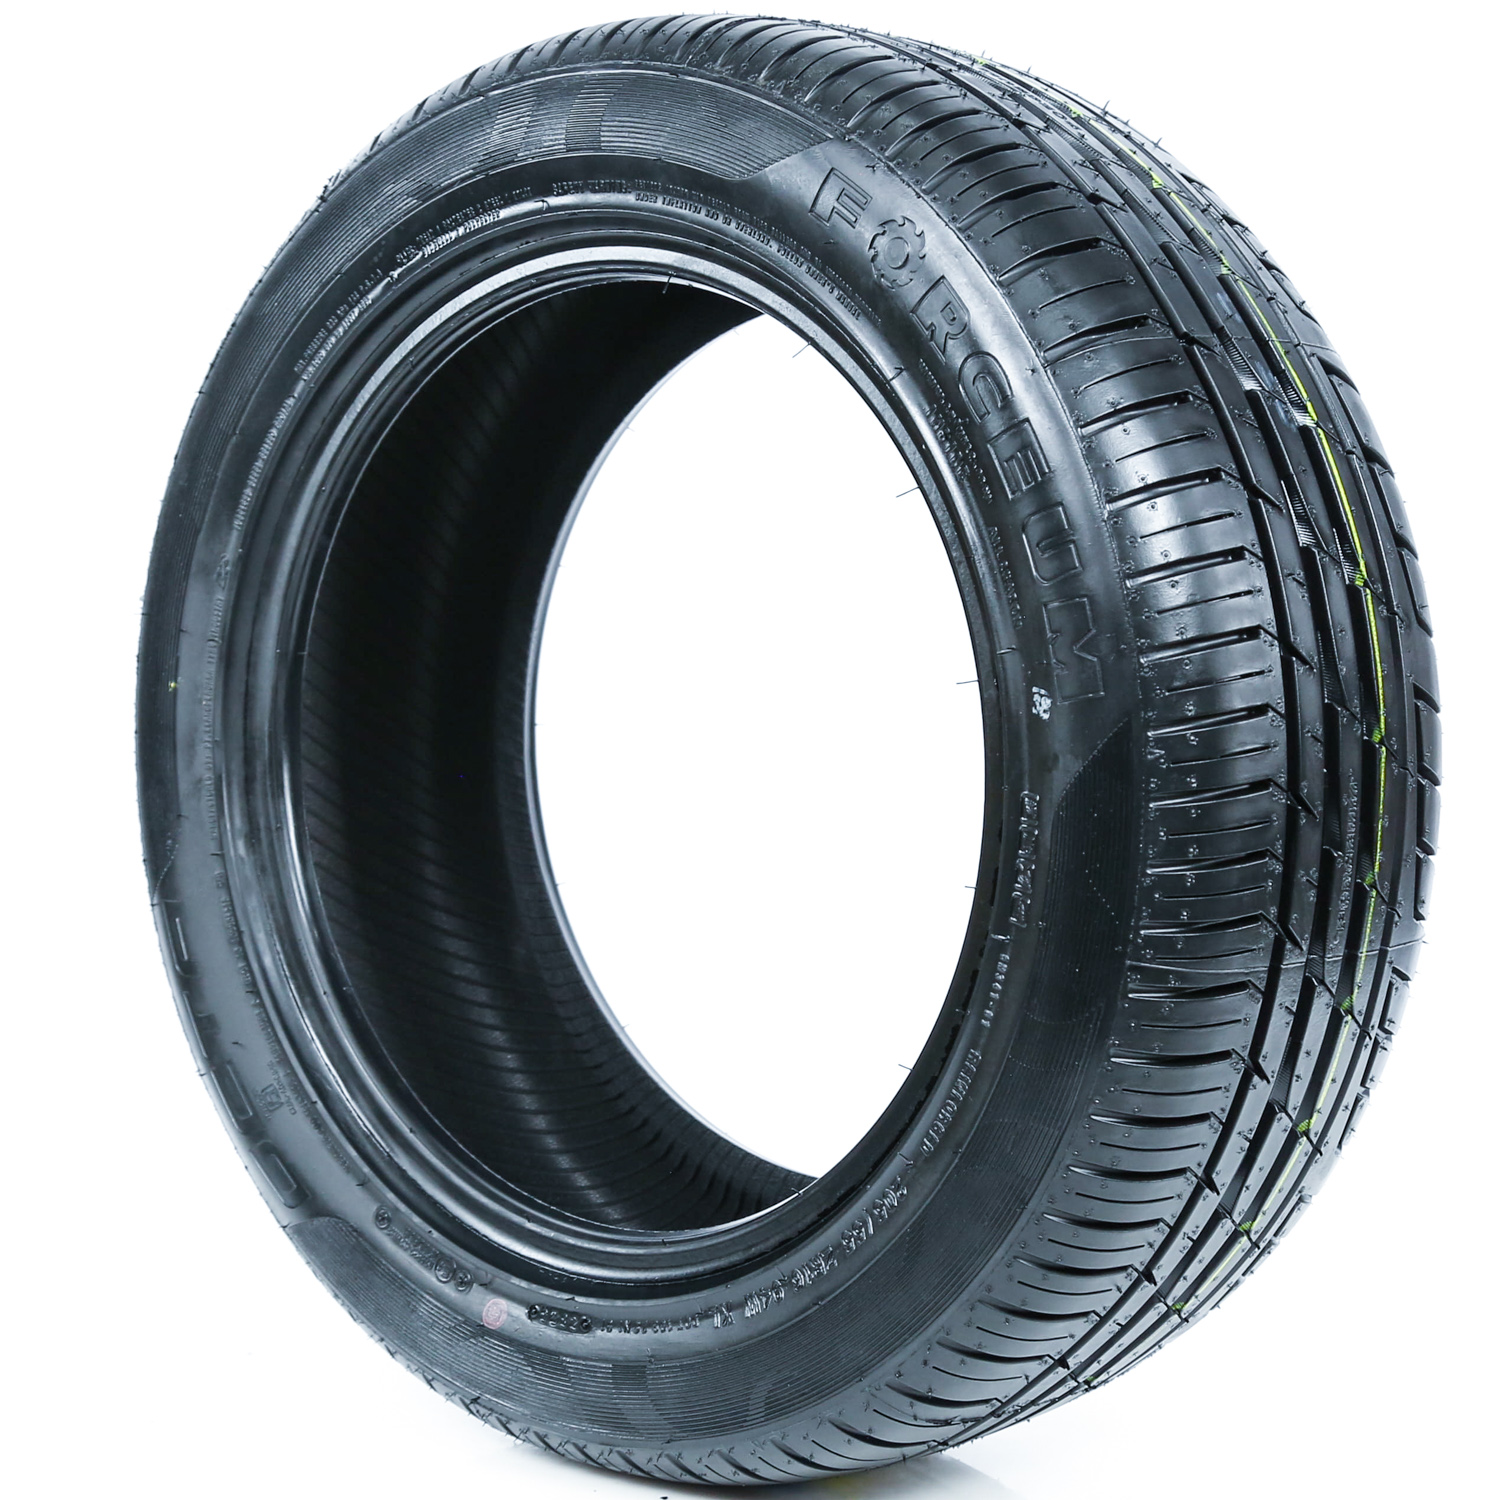 Forceum Octa 205/55ZR16 205/55R16 94W XL A/S High Performance Tire 